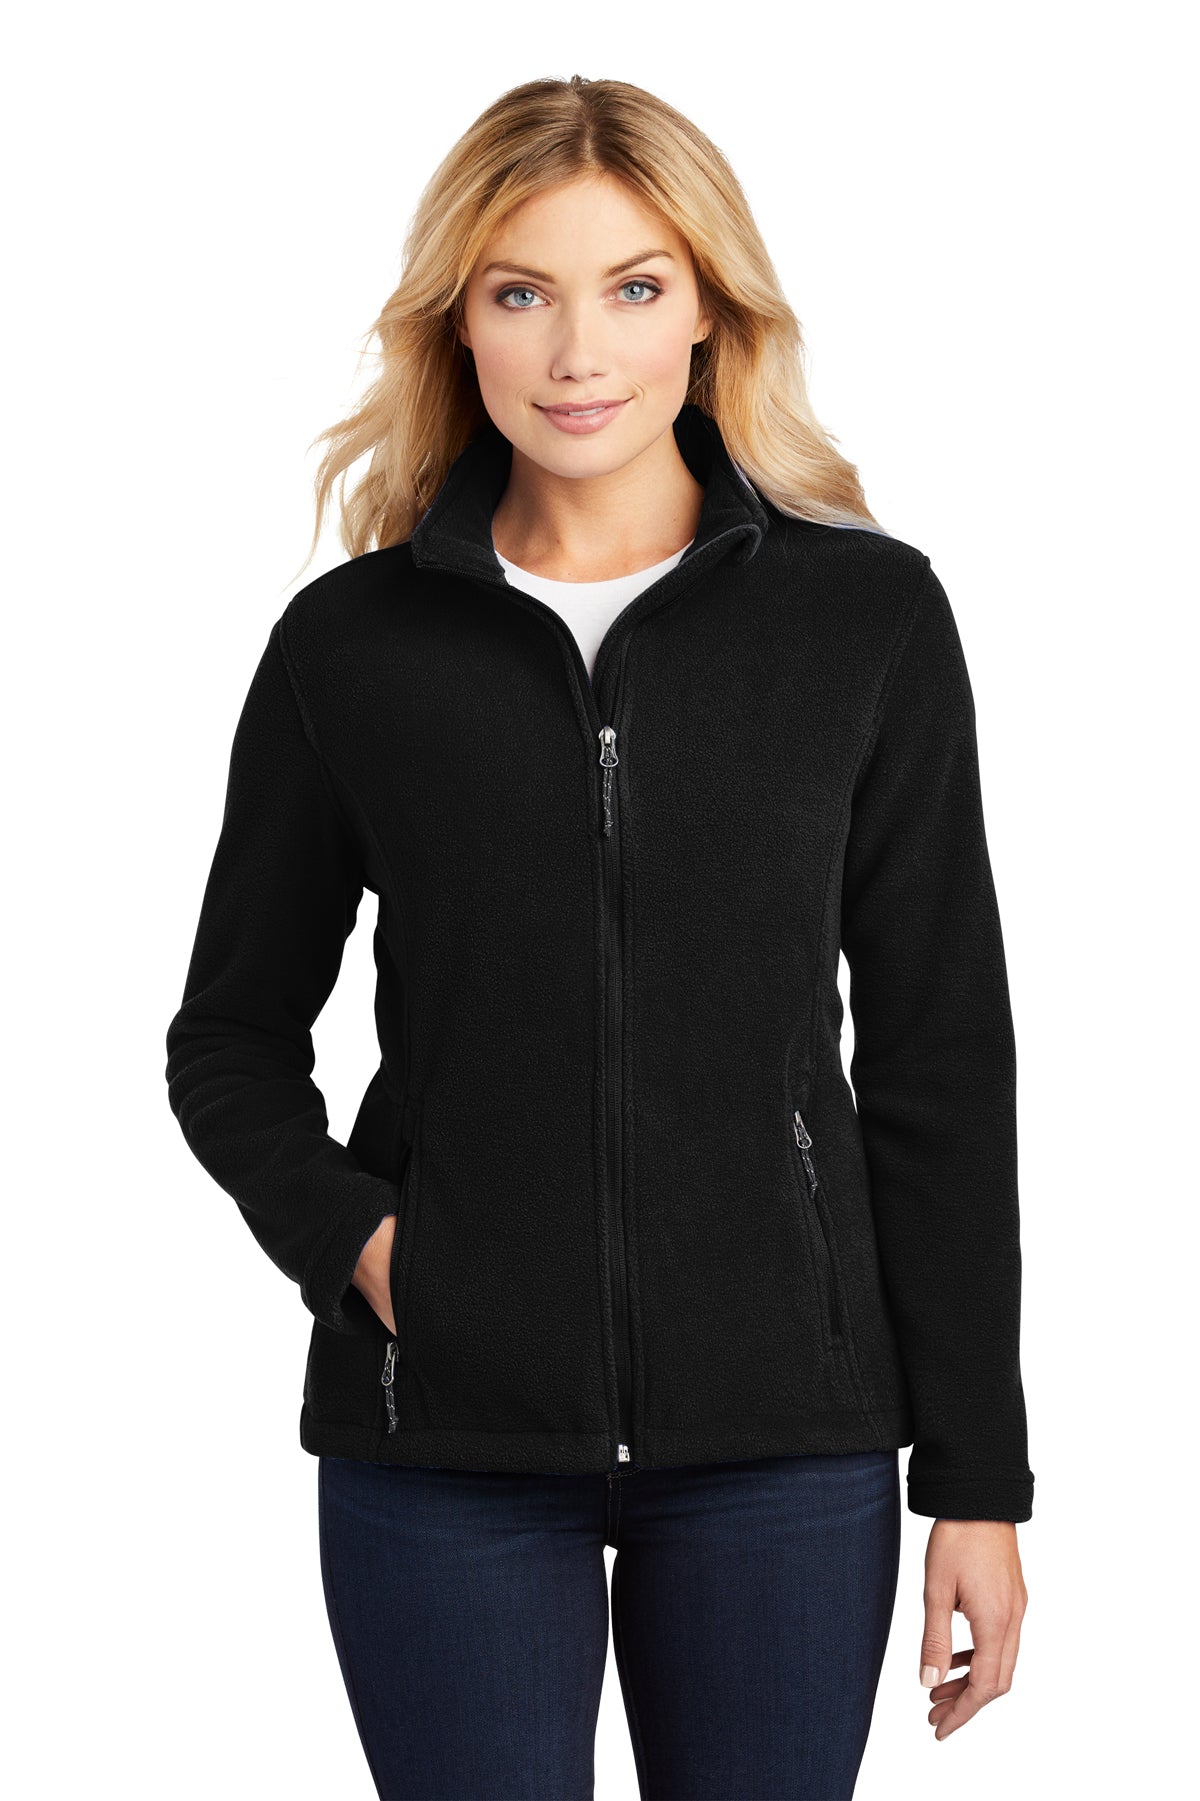 Port Authority® Ladies Value Fleece Jacket L217 2XL